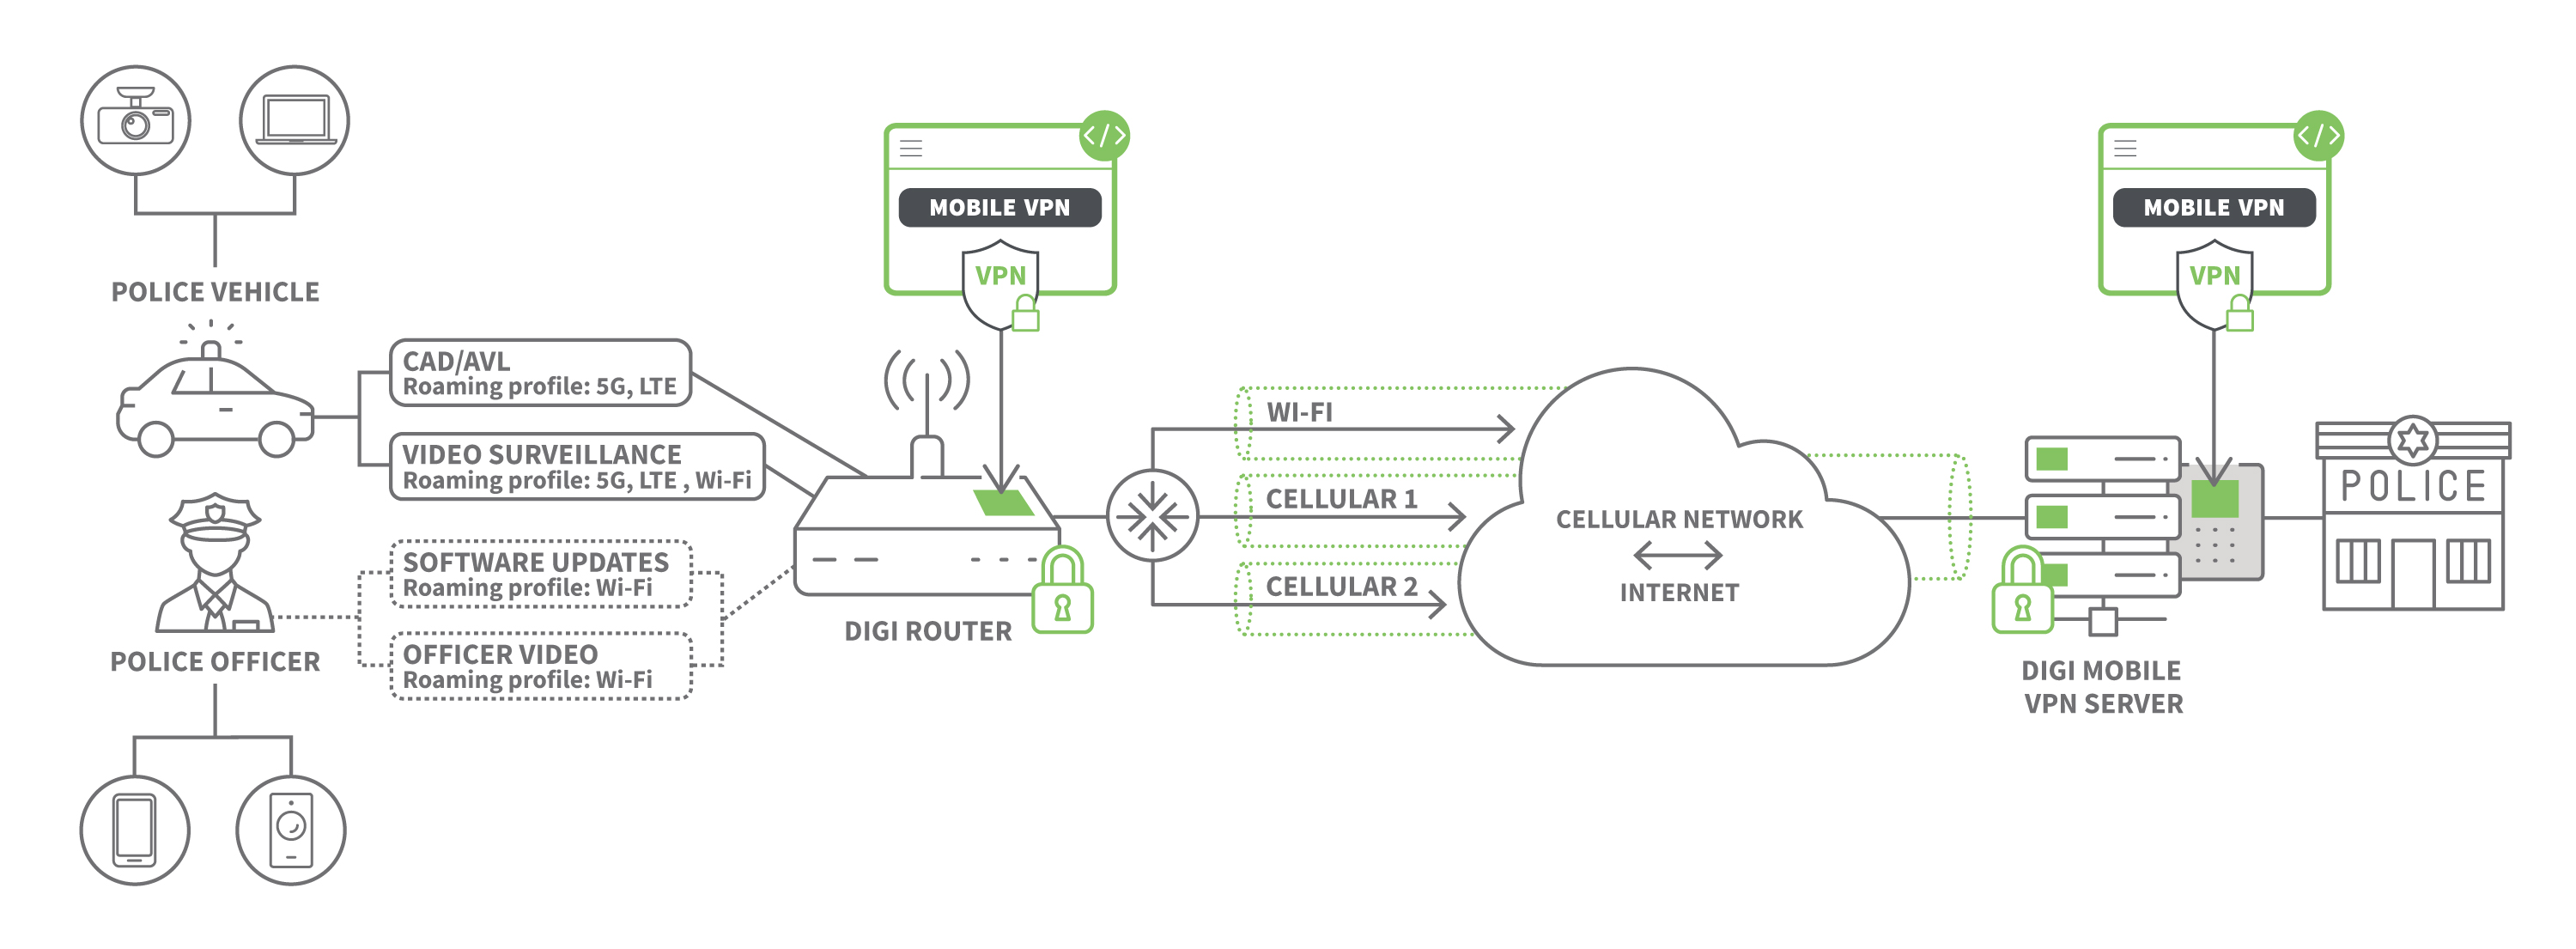 Diagrama de Digi Mobile VPN